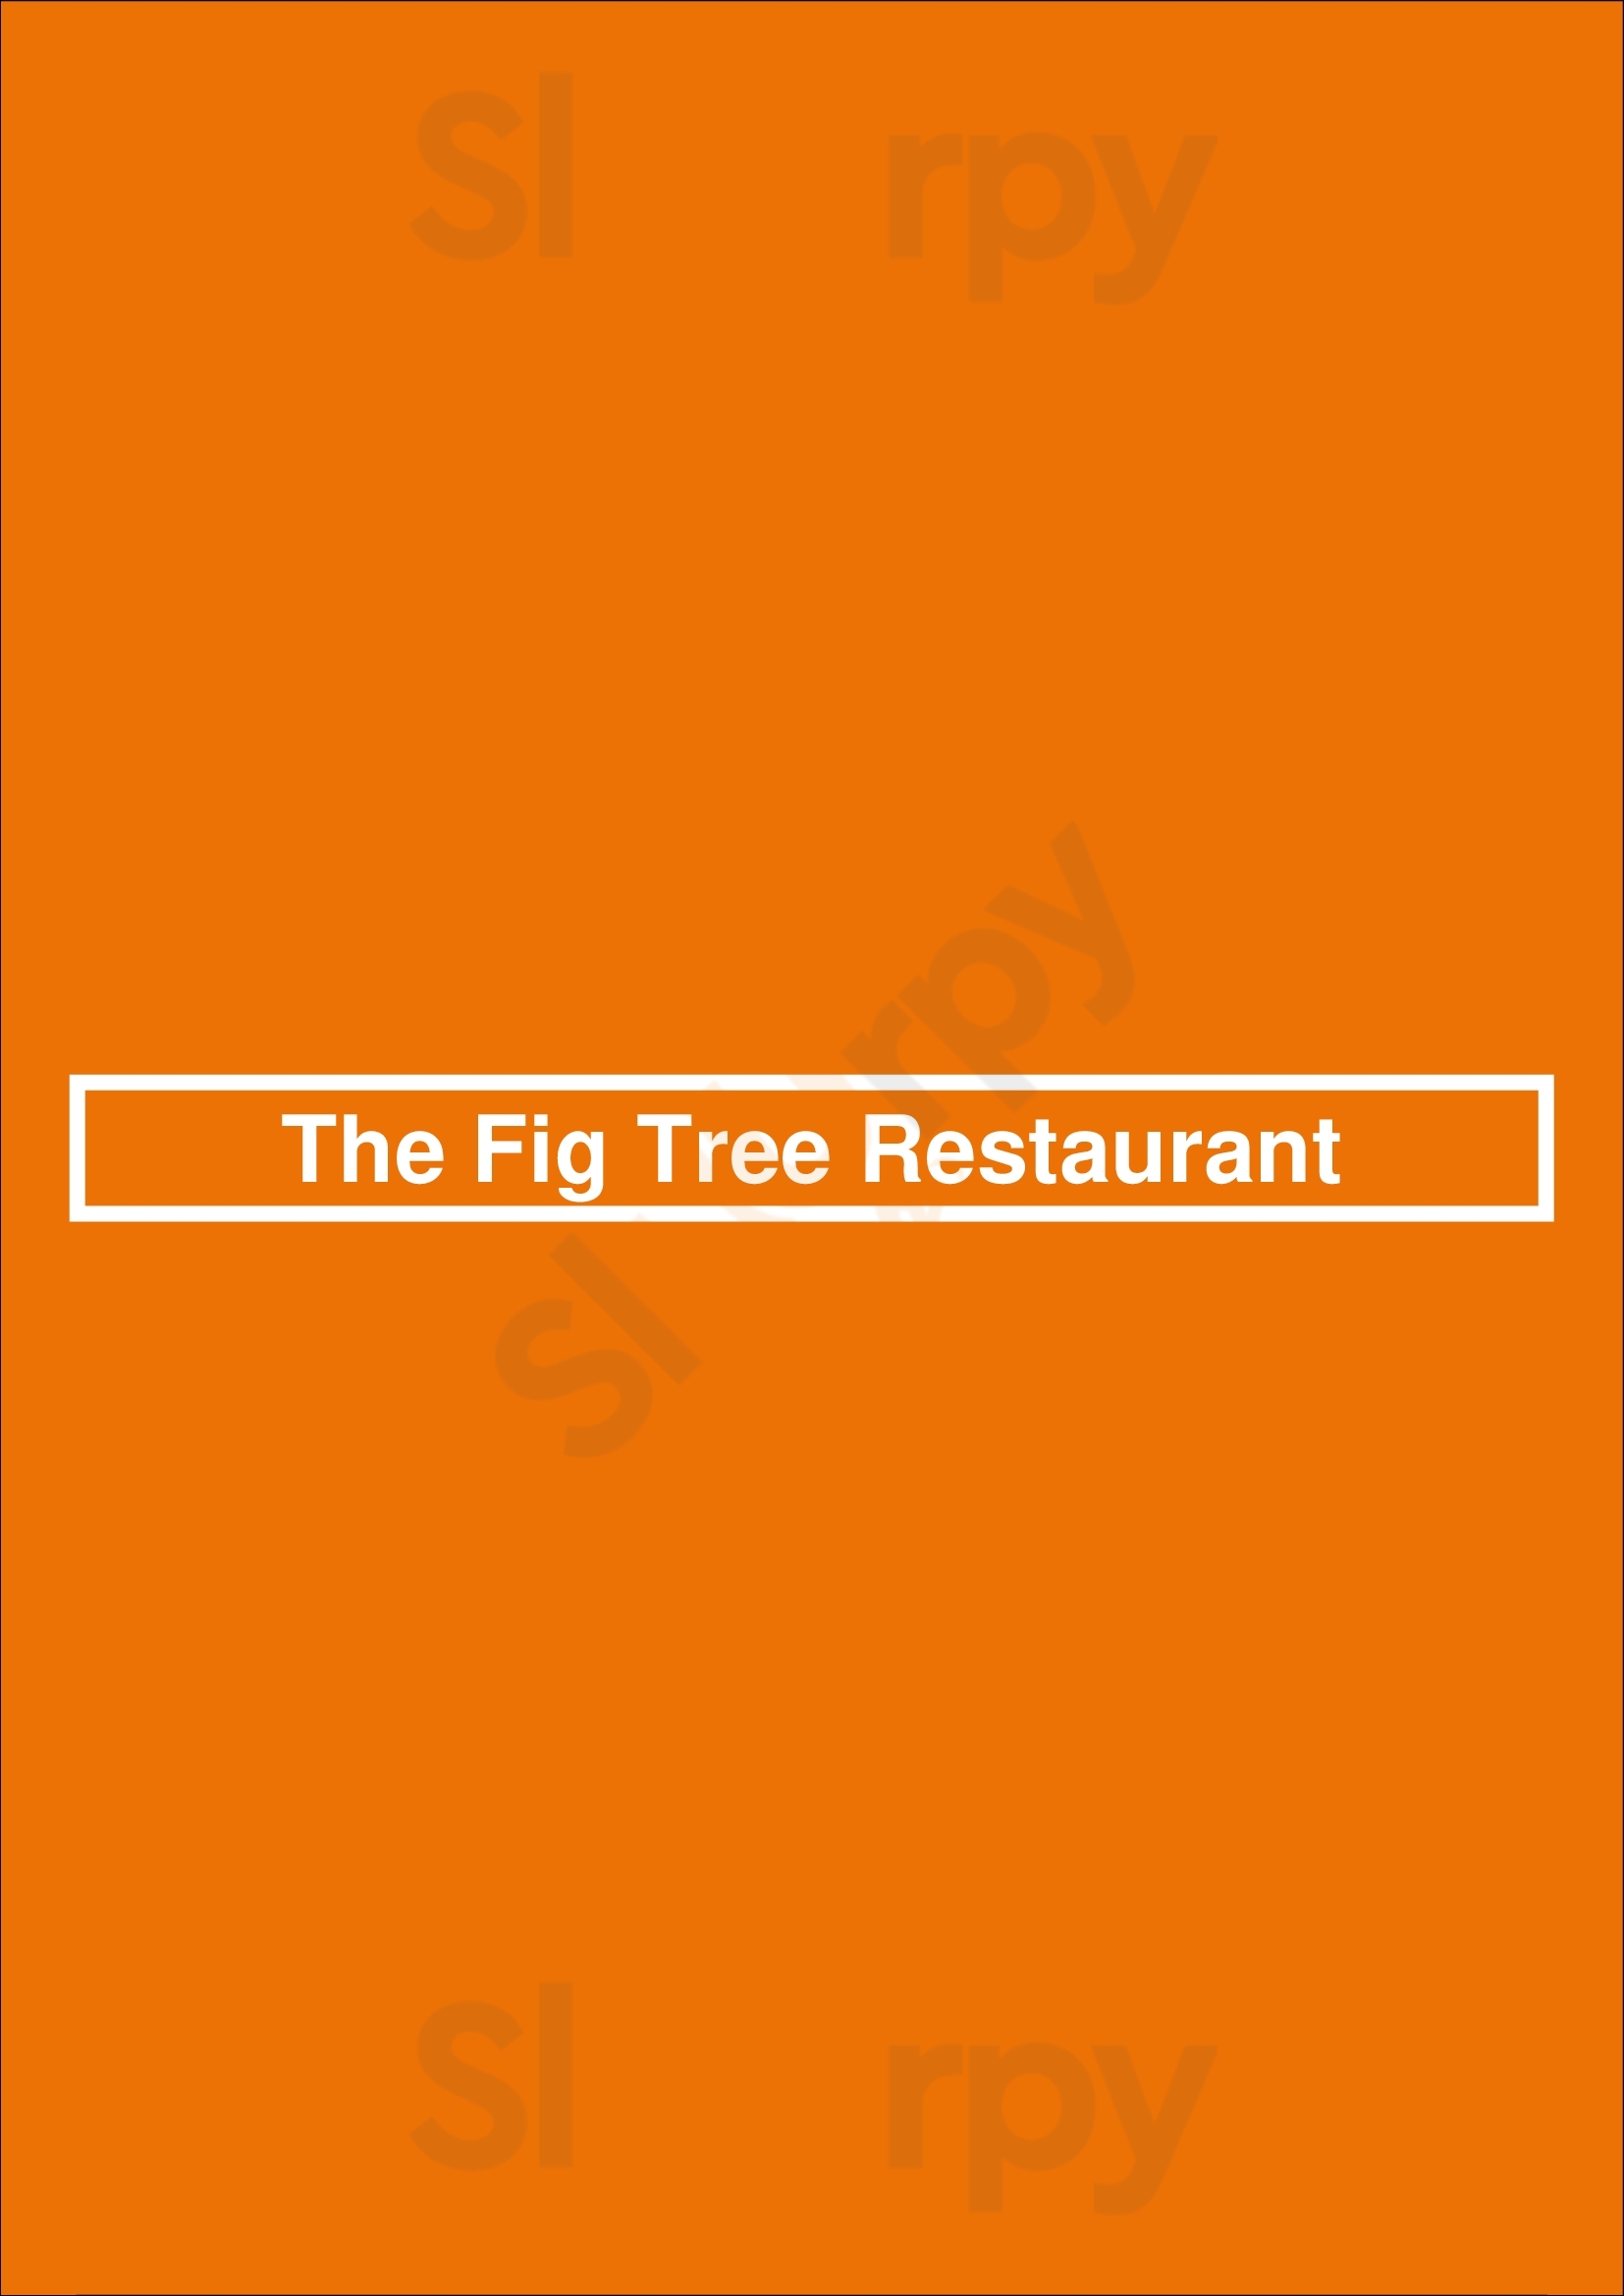 The Fig Tree Restaurant Charlotte Menu - 1